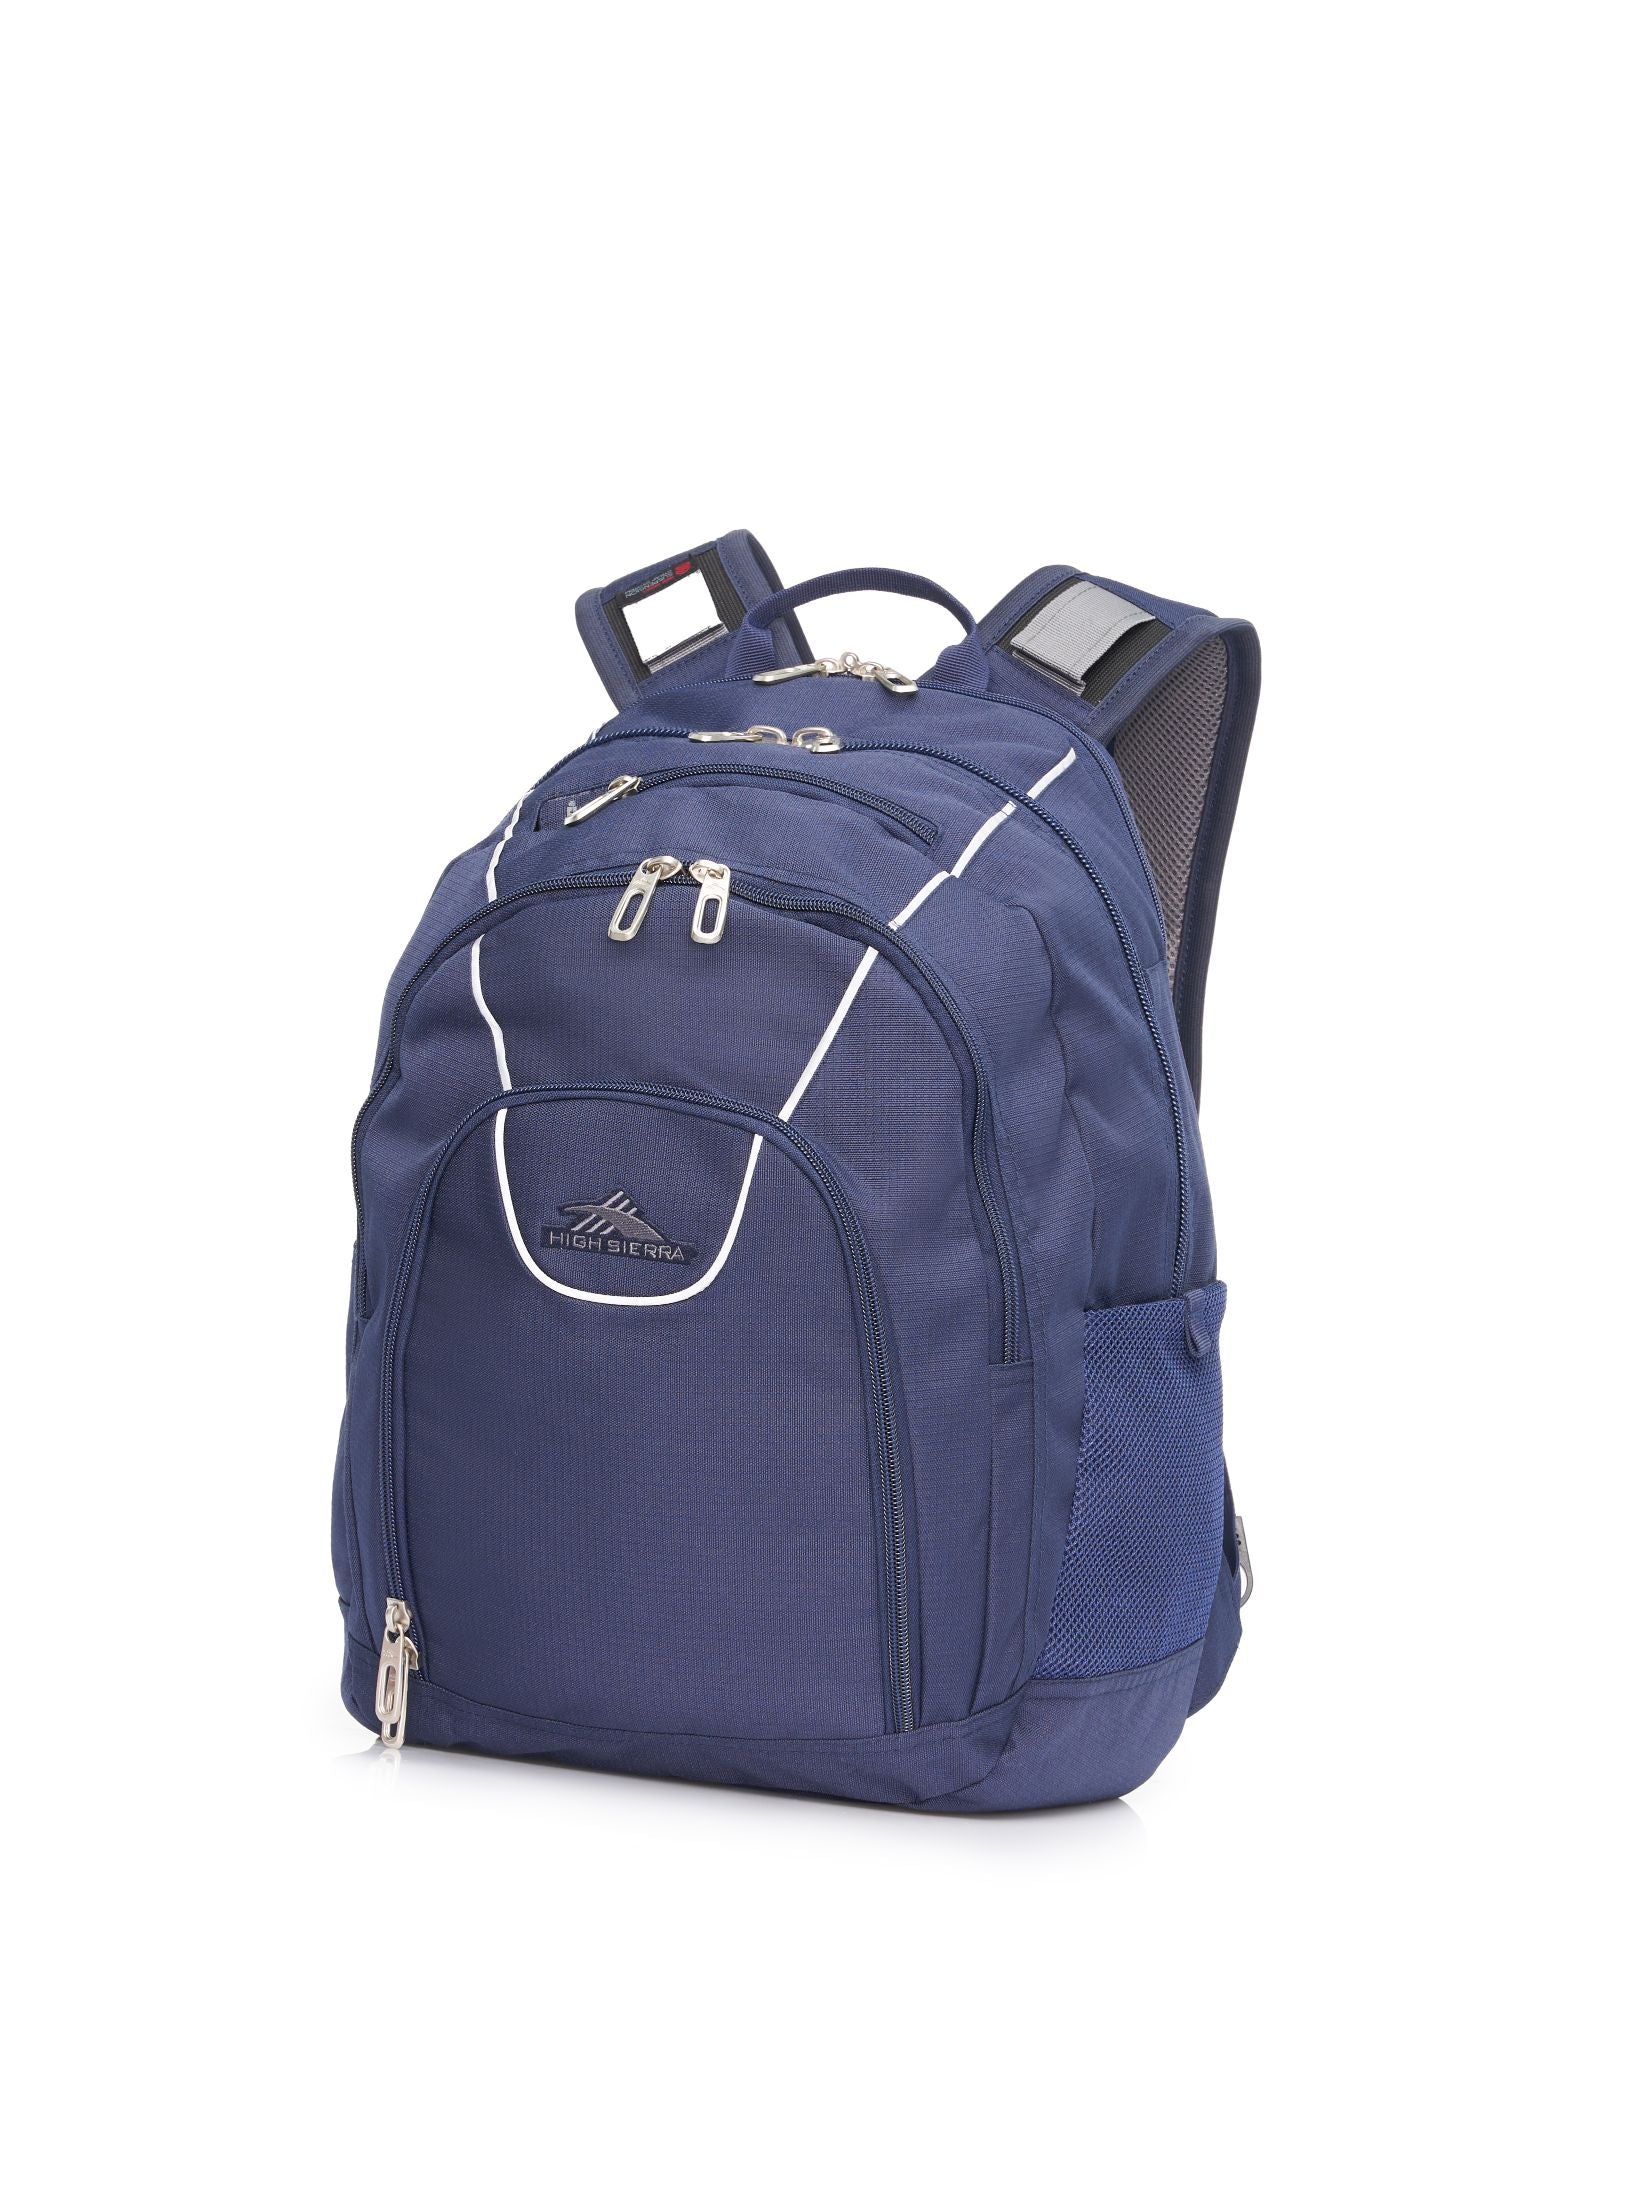 High Sierra - Academy 3.0 Backpack - Marine Blue-2